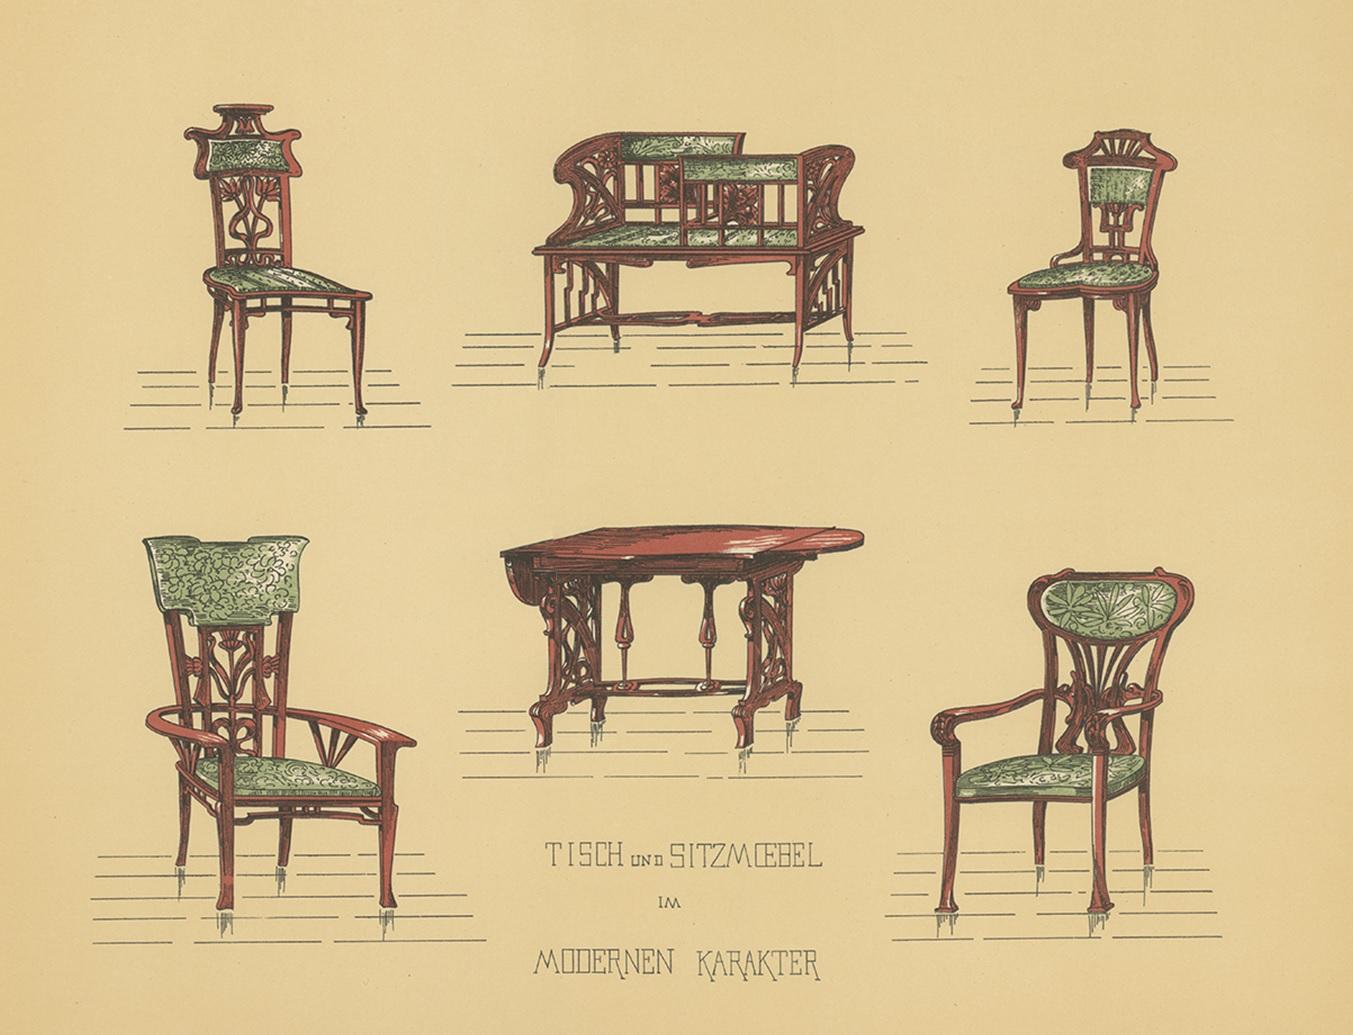 Antique print titled 'Tische und Sitzmoebel im Modernen Karakter'. Lithograph of tables and chairs. This print originates from 'Det Moderna Hemmet' by Johannes Kramer. Published by Ferdinand Hey'l, circa 1910.